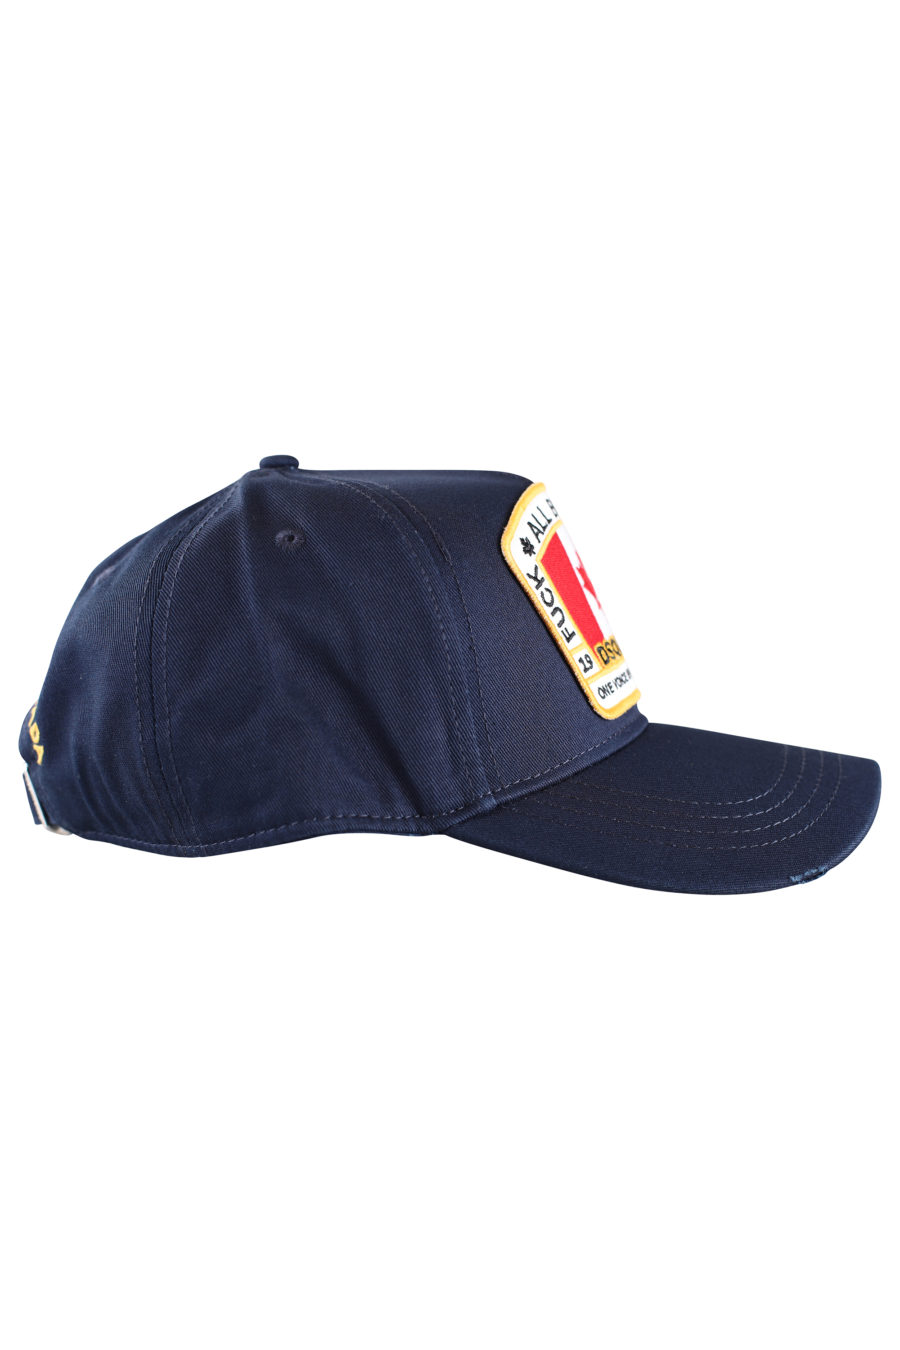 Gorra azul con logo en parche de bandera canada - IMG 9979